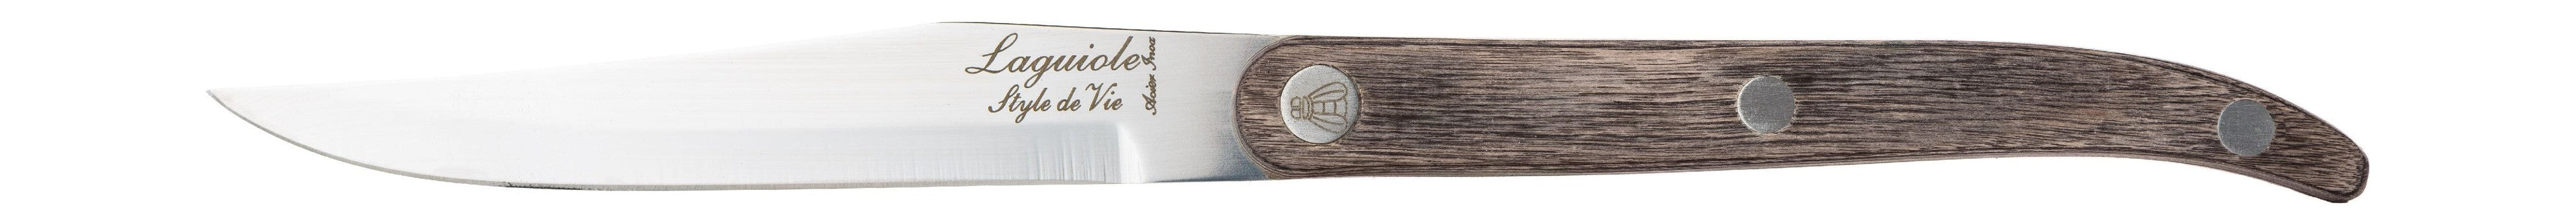 Style de vie autentique laguiole innovasjonslinje biffkniver 6 stk sett, grå pakka med glatt blad